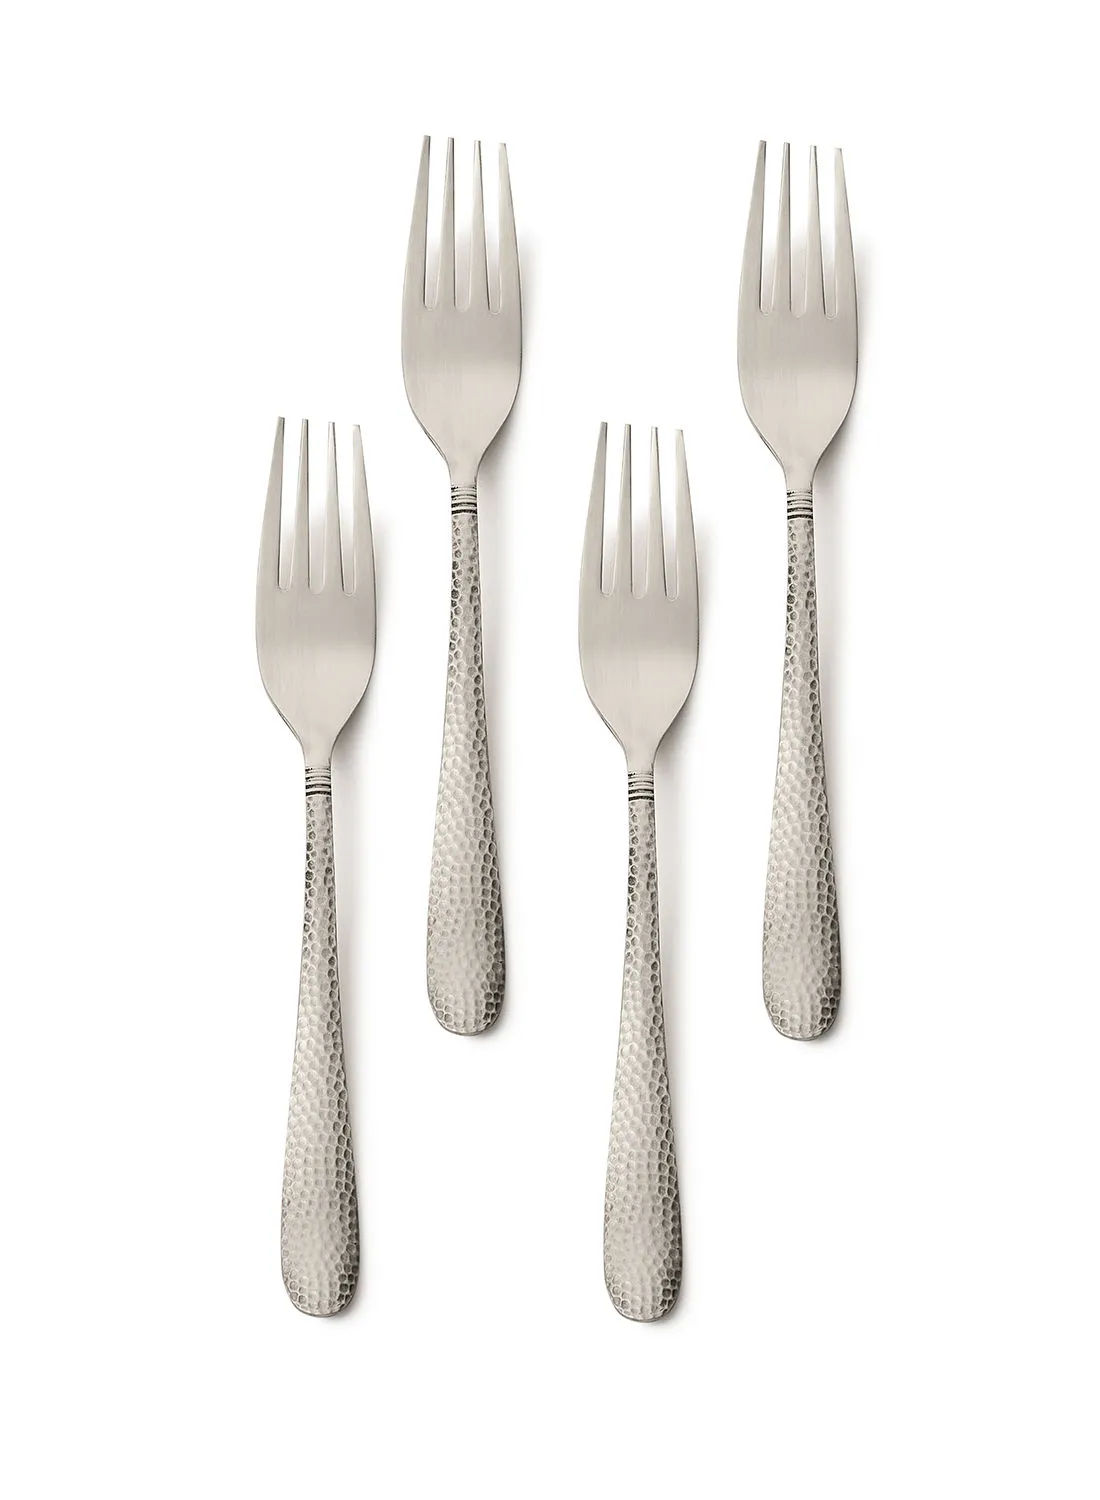 Amal 4 Piece Forks Set - Made Of Stainless Steel - Silverware Flatware - Fork Set - Serves 4 - Design Silver Aster